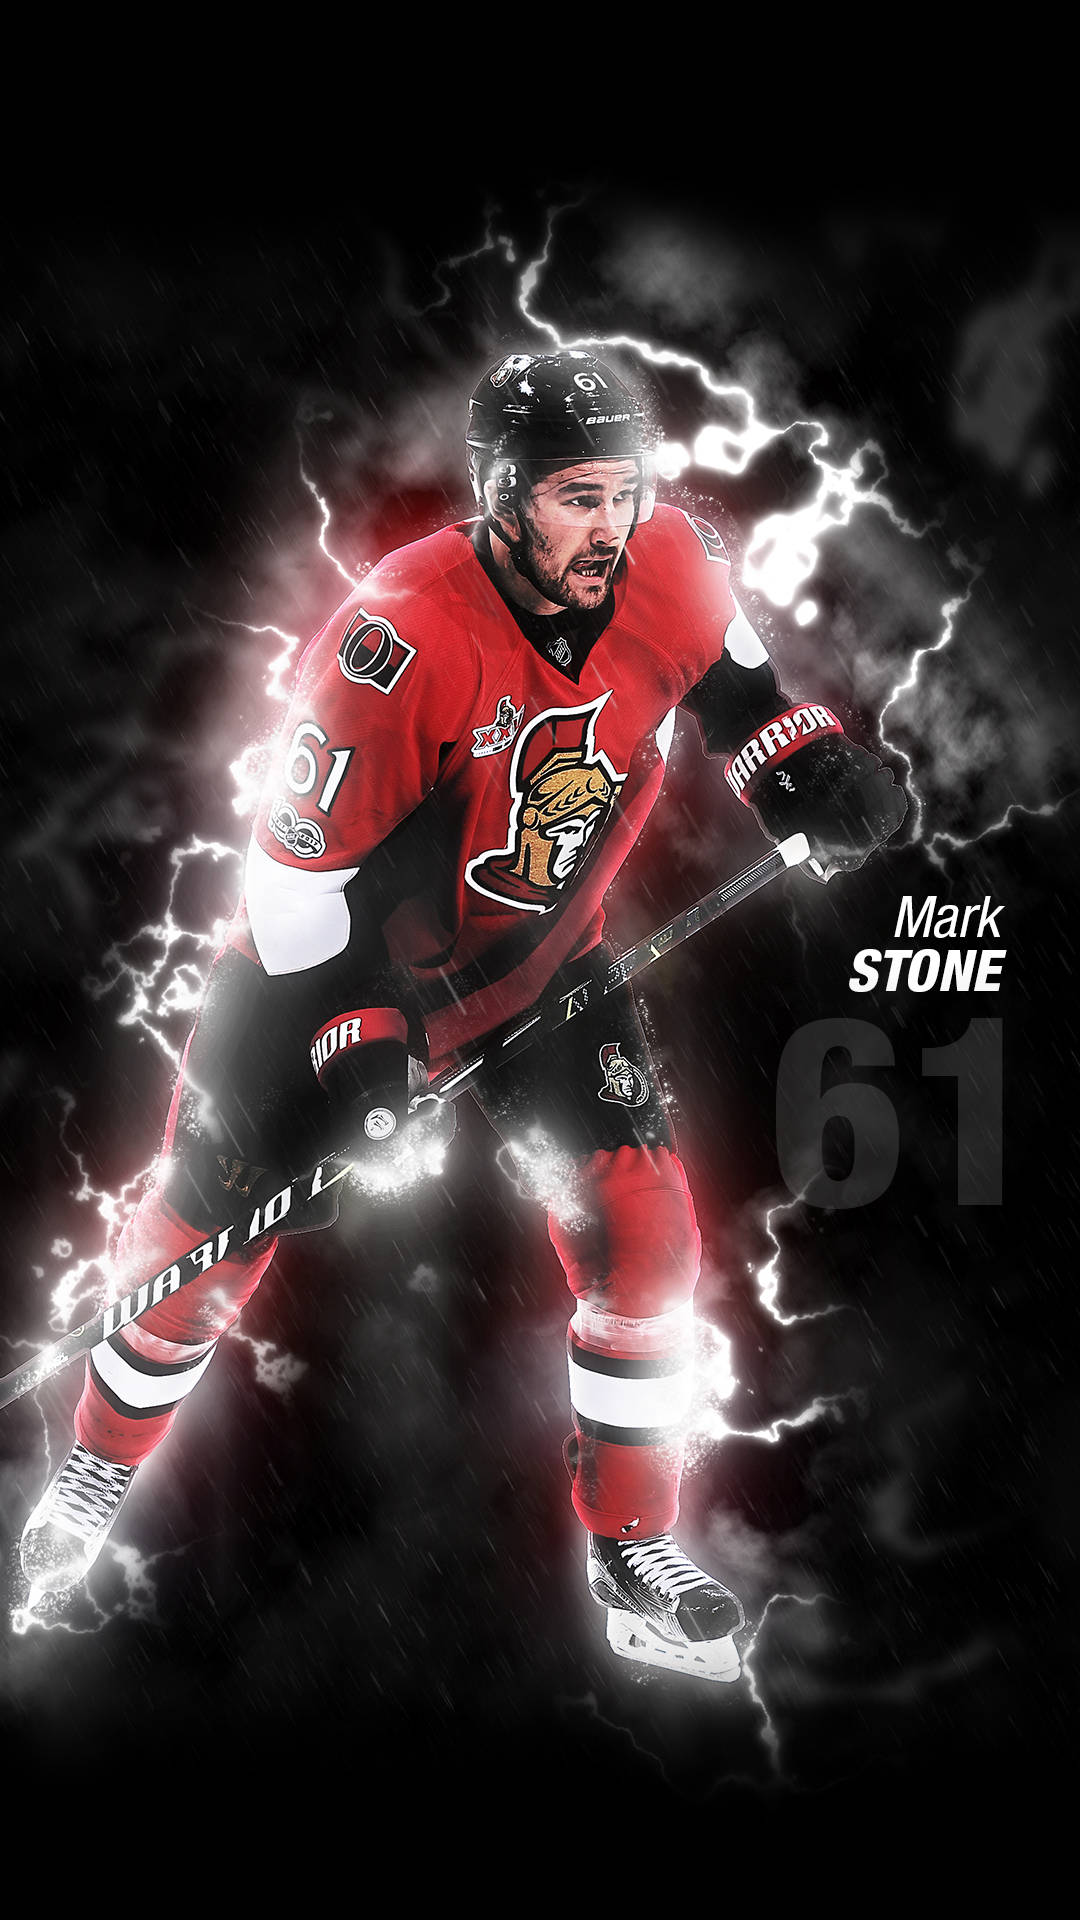 Canadisk Ottawa Senators spiller Mark Stone med lynillustration. Wallpaper